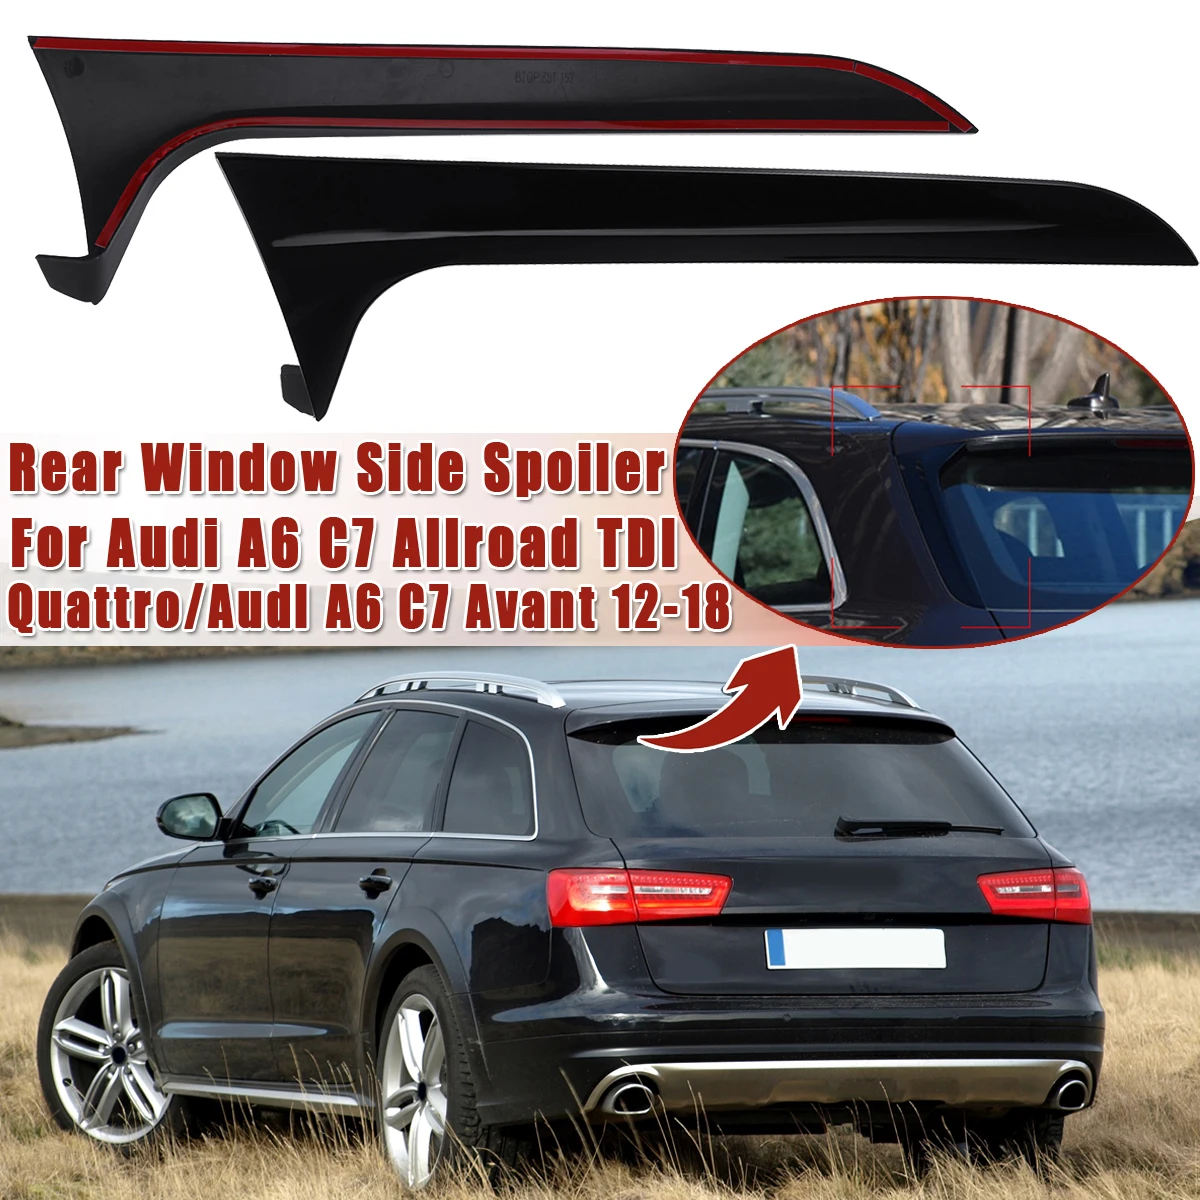 

2pcs Car Rear Window Side Spoiler For Audi A6 C7 Travel Edition Allroad TDI/Avant 2012-2018 Gloss Black Rear Canard Splitter